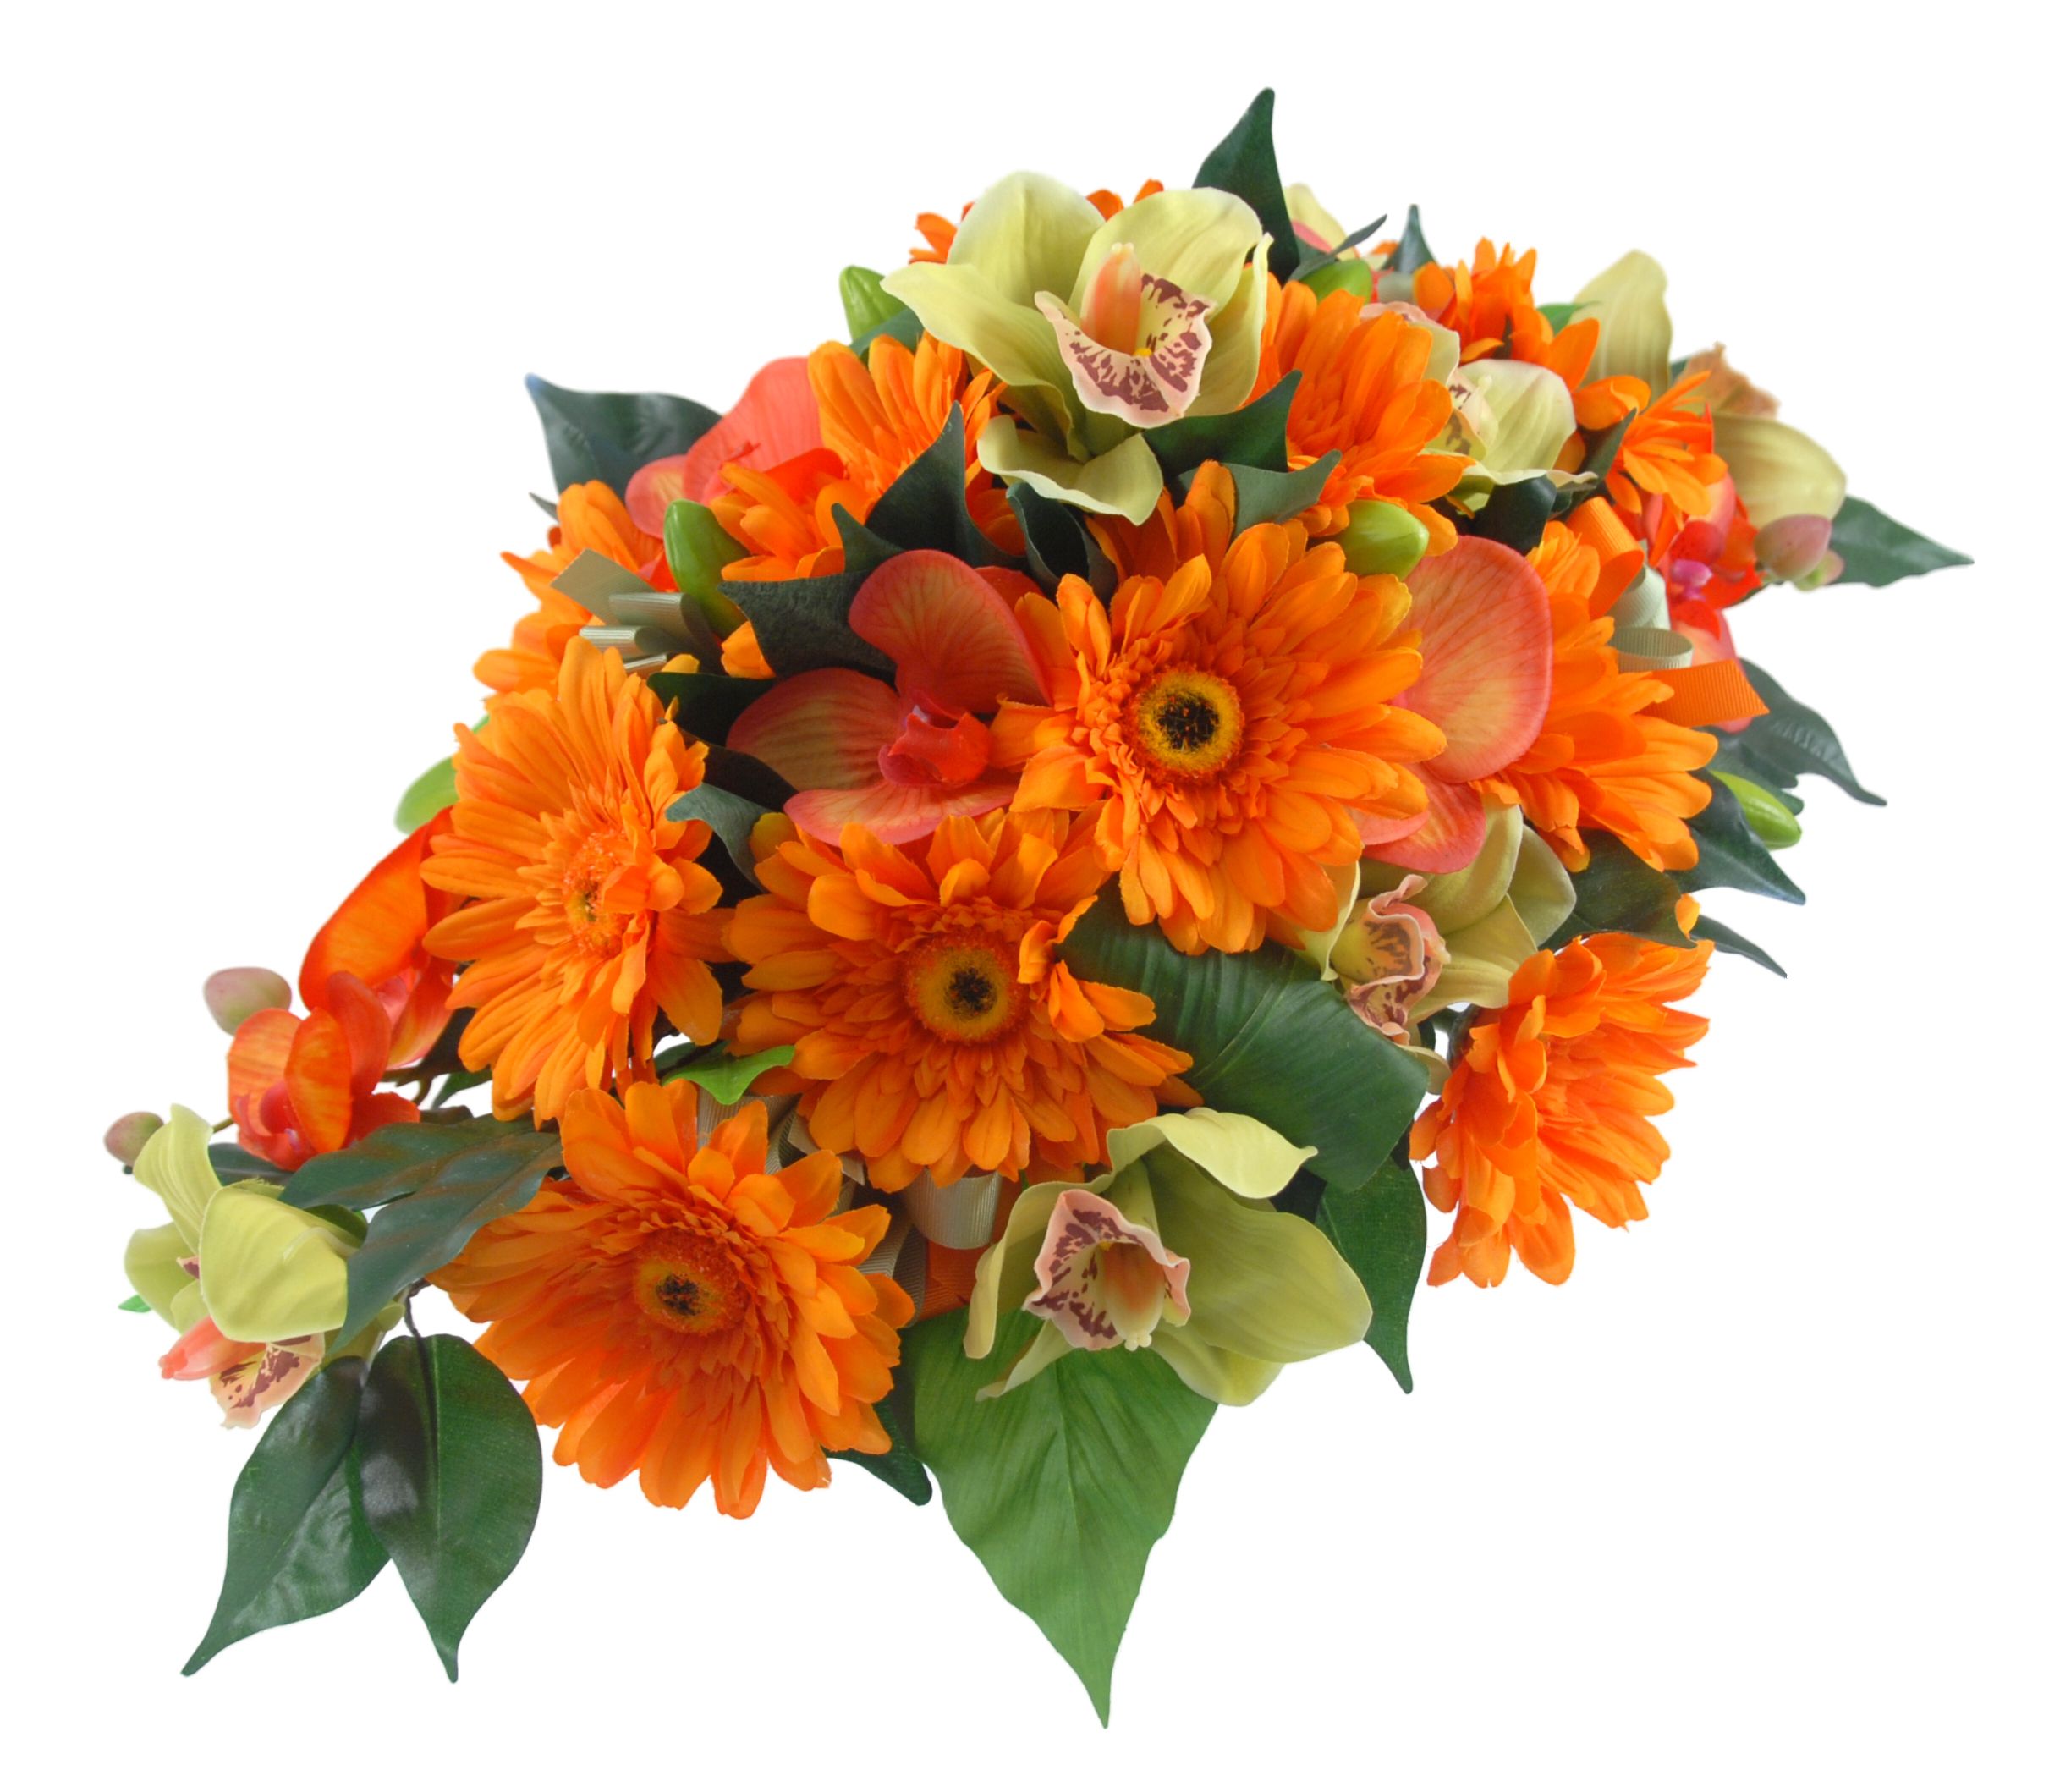 purple and orange flower arrange wedding table - Google Search ...